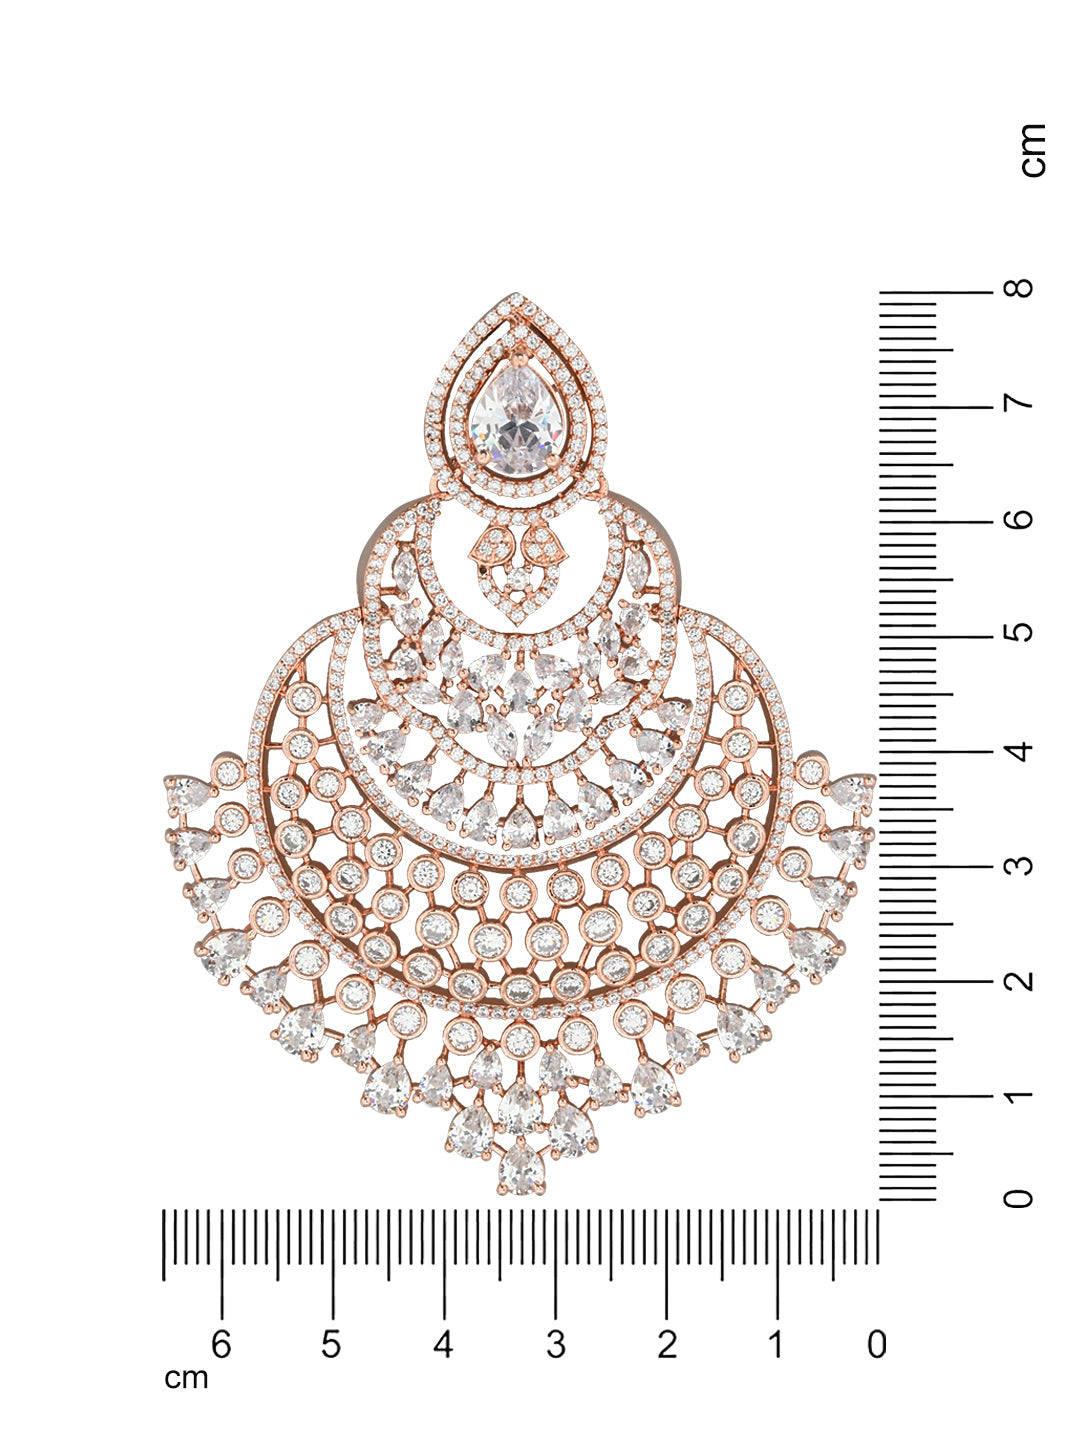 Women's Rosegold Plated Glittering Crystal Ad Stone Studs Earrings (E3071Zg) - I Jewels